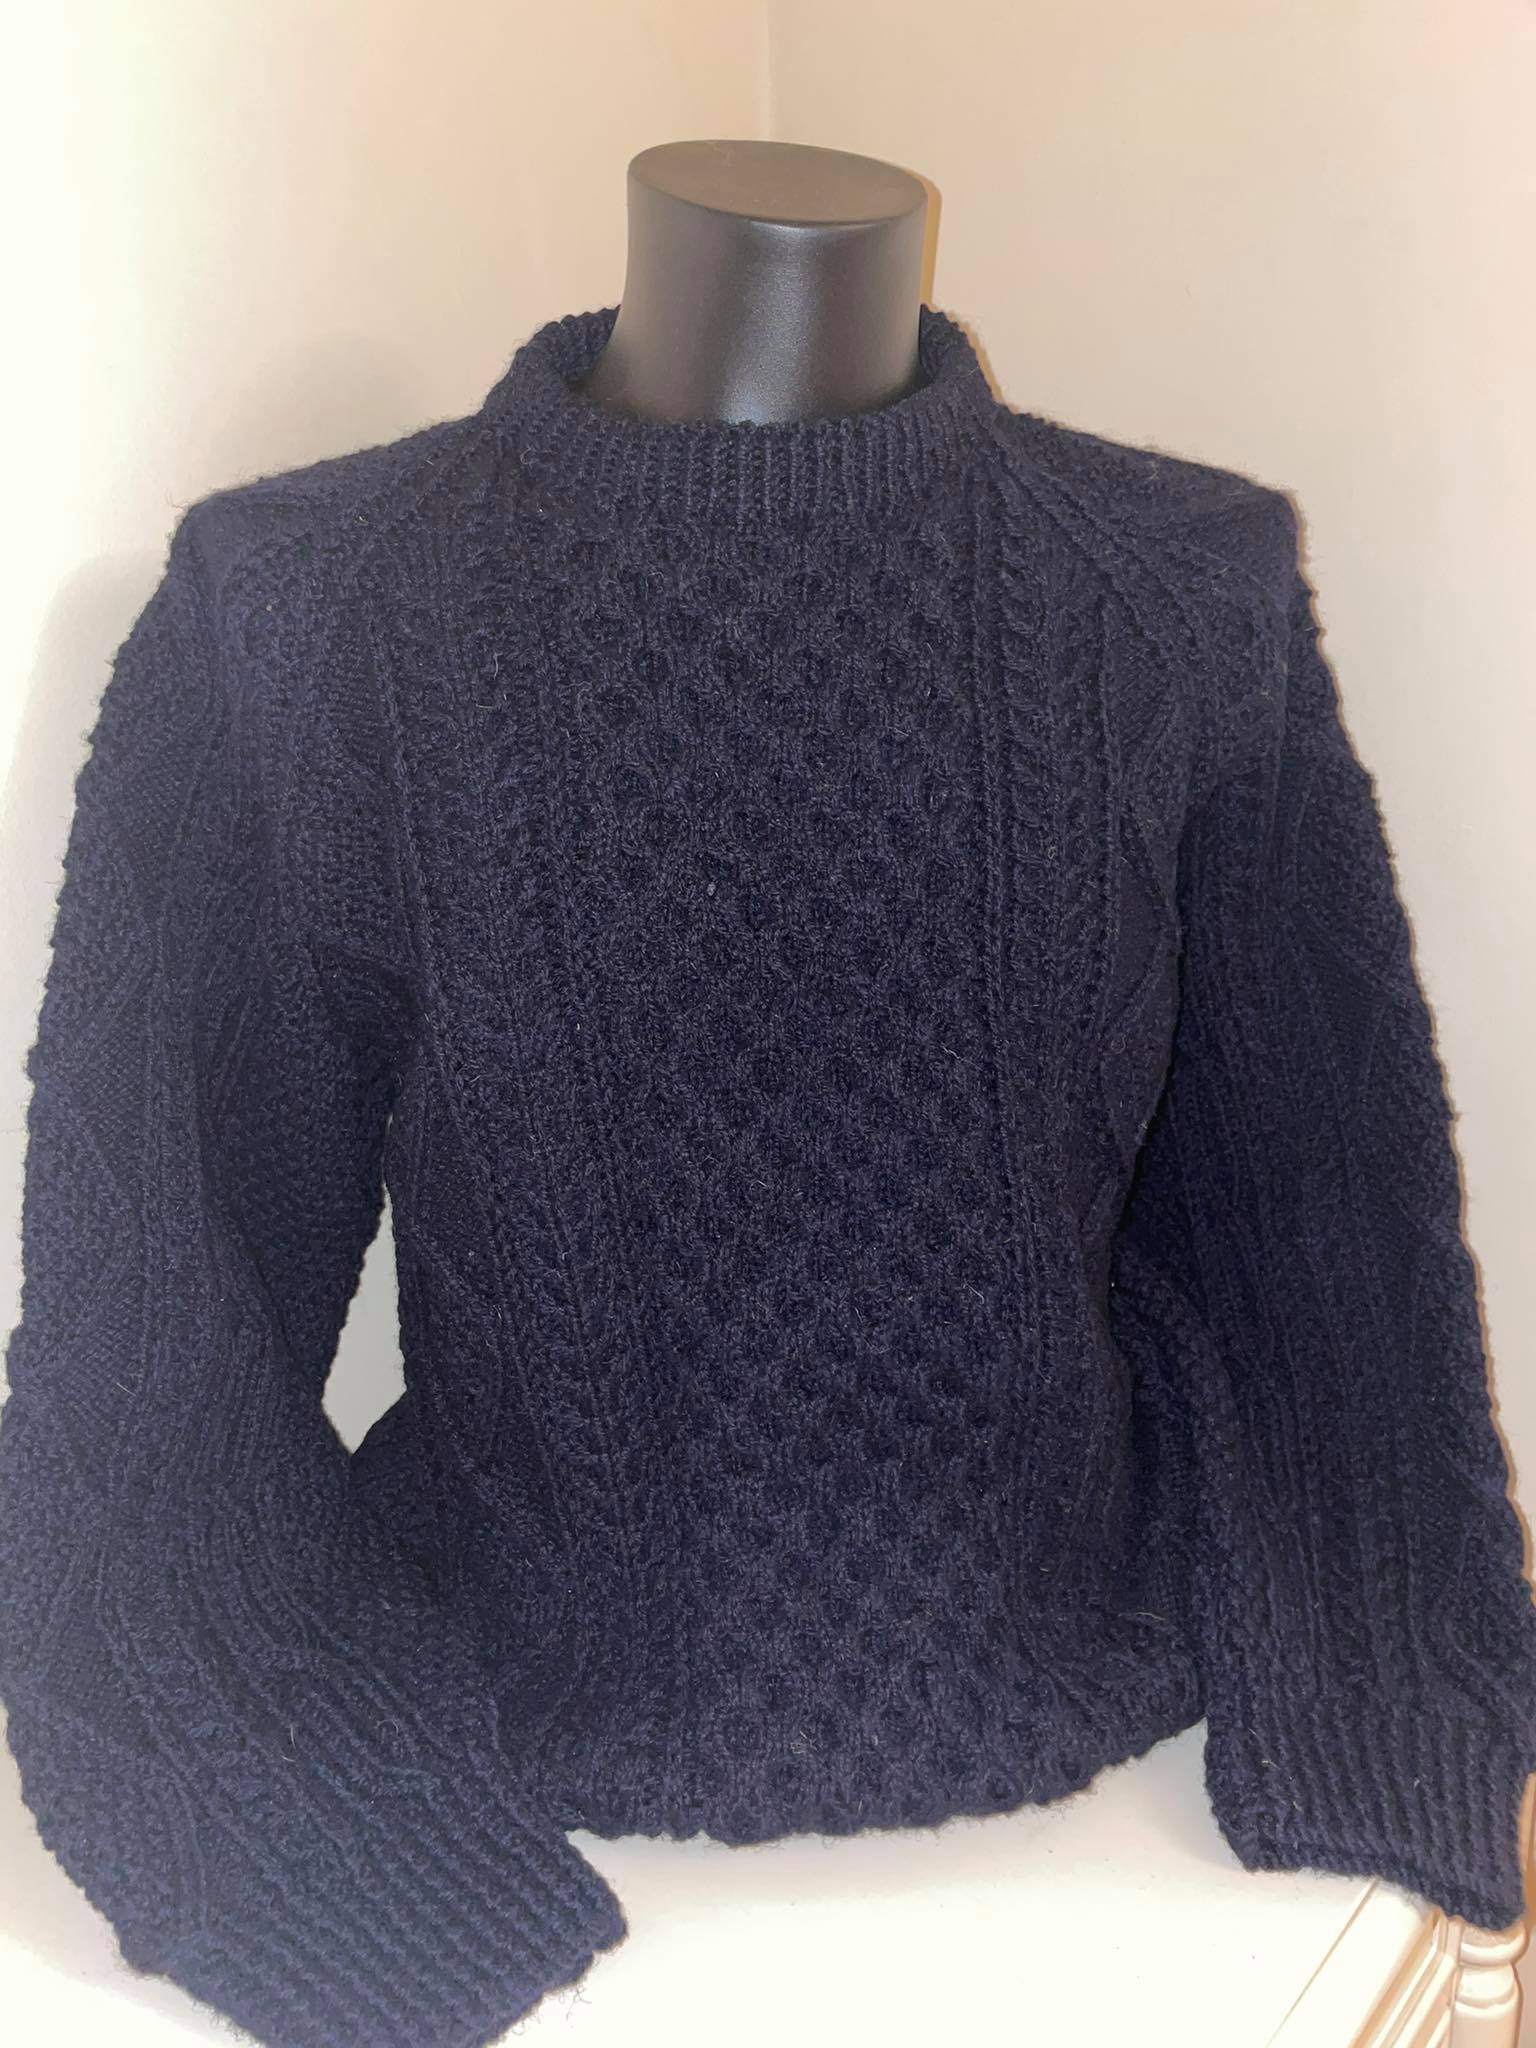 HANDKNIT ARAN SWEATER (HKH6) - Aran Islands Sweaters